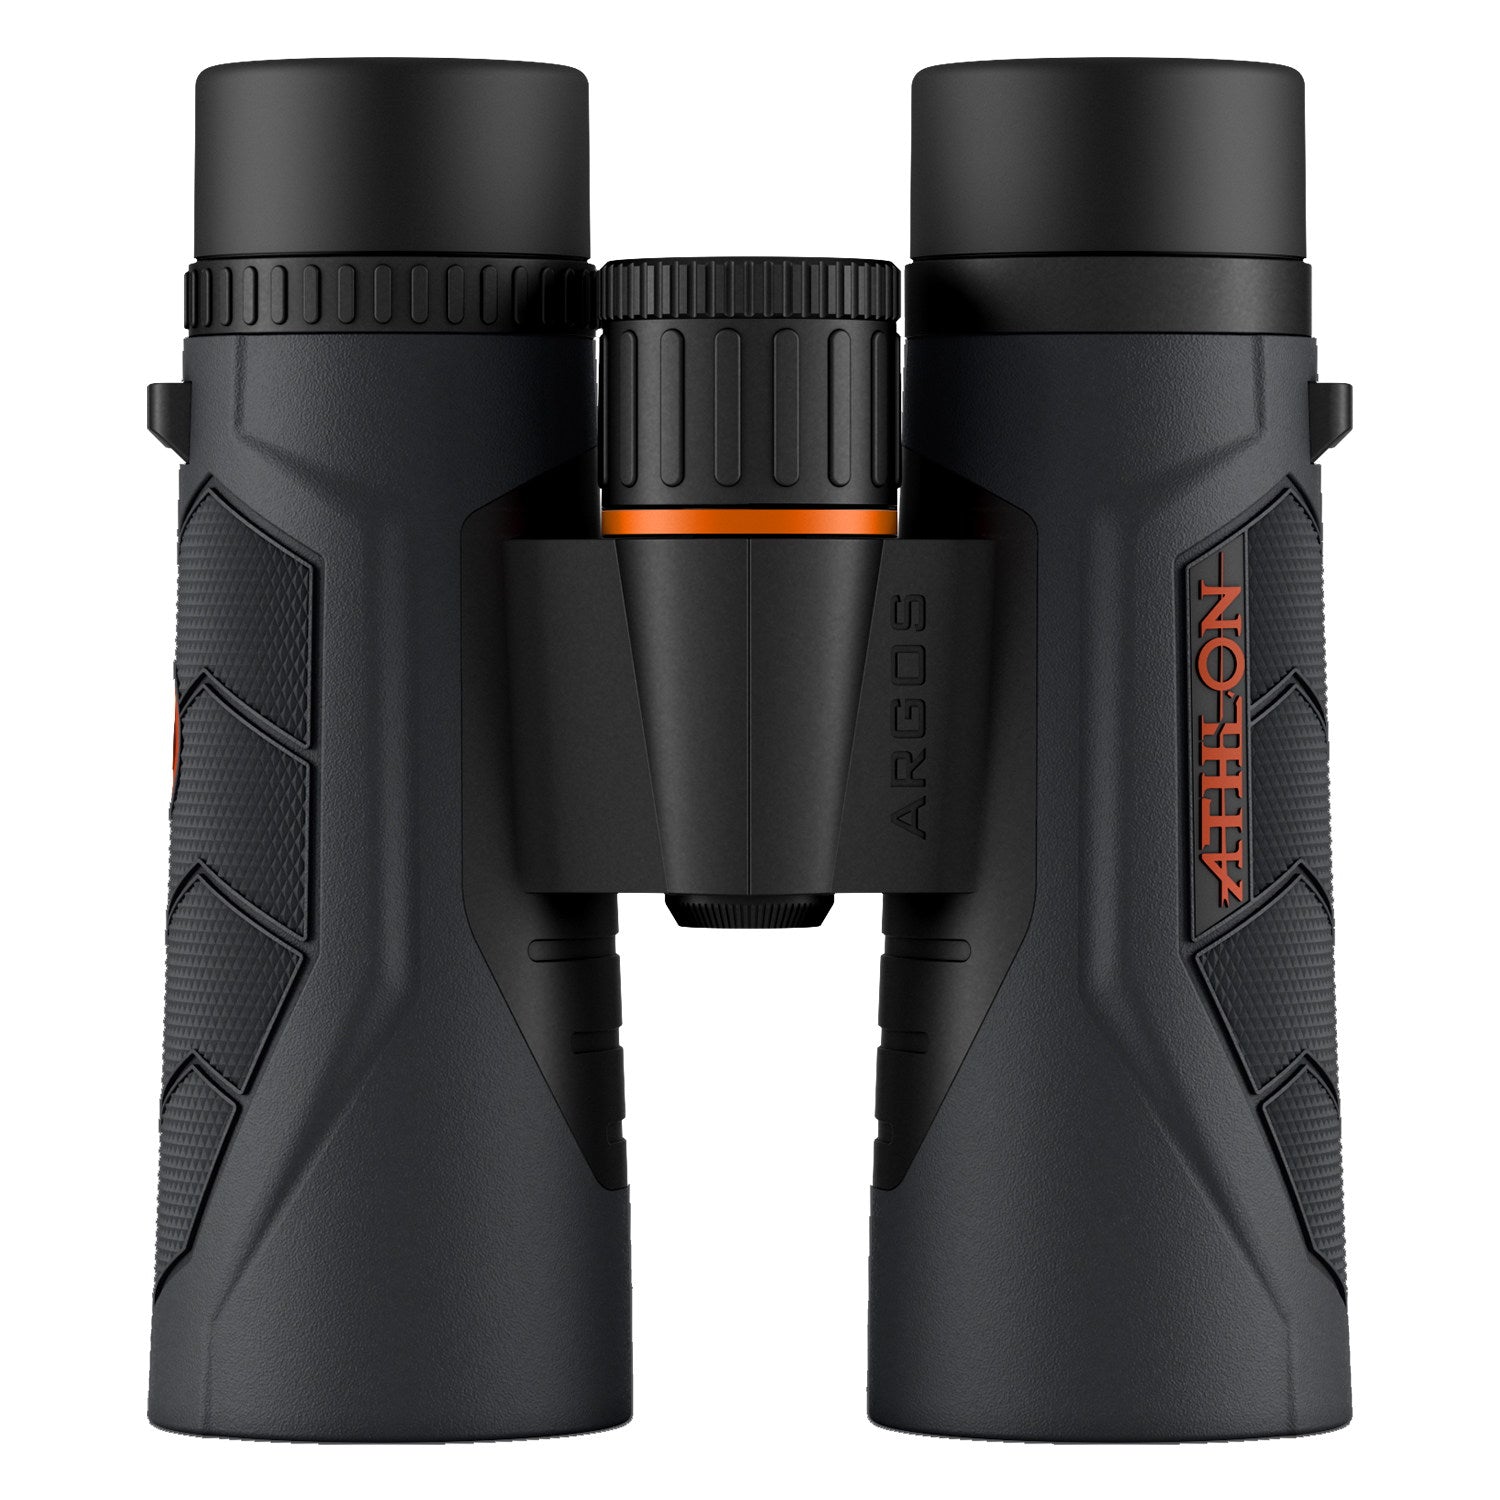 Athlon Argos G2 UHD Binoculars